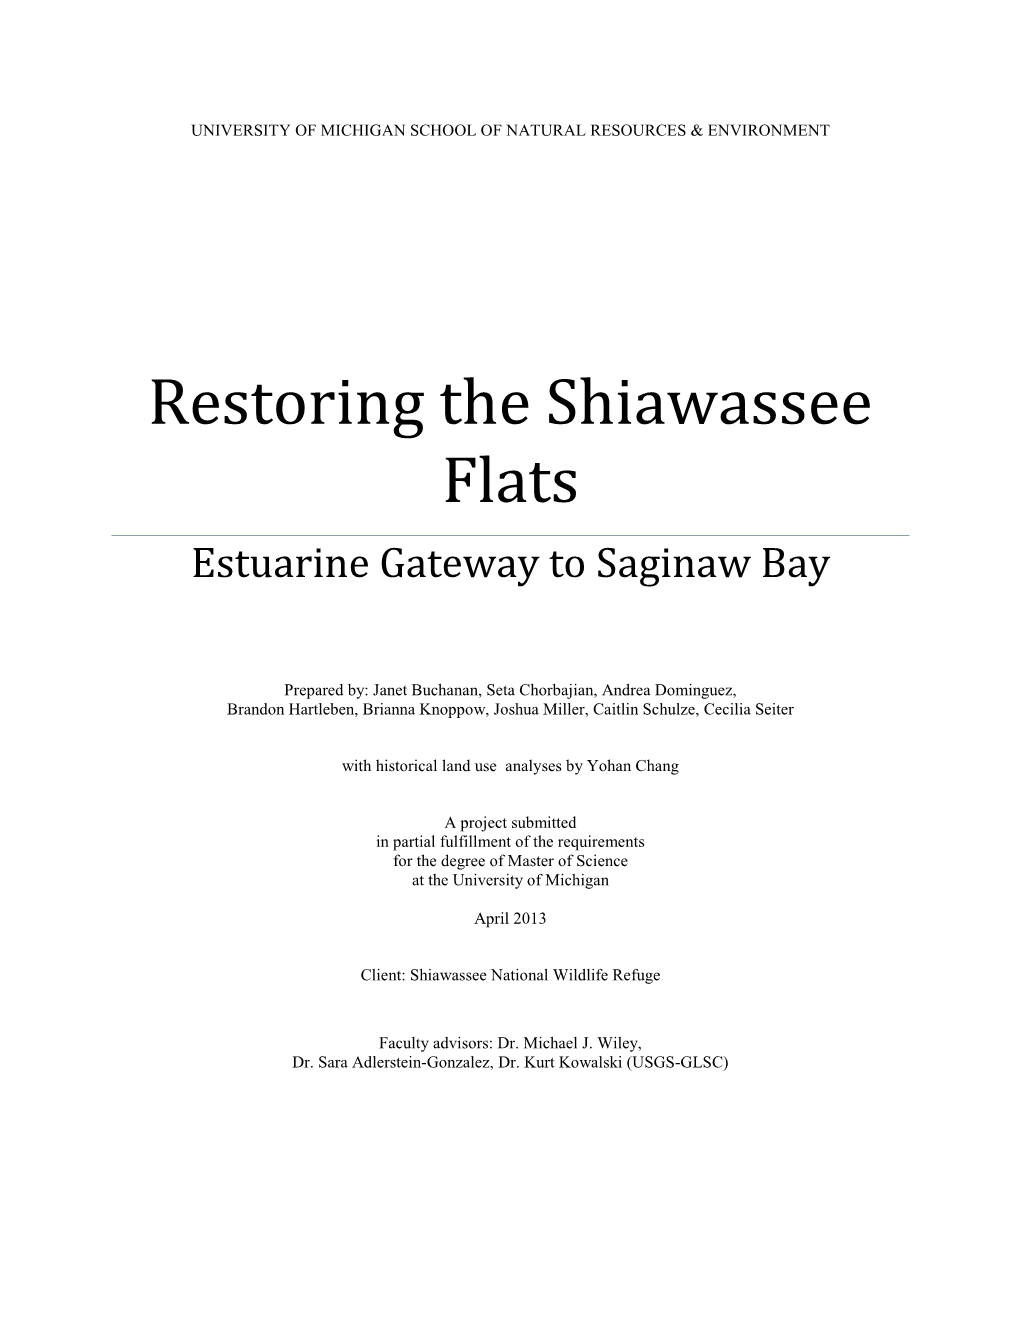 Restoring the Shiawassee Flats